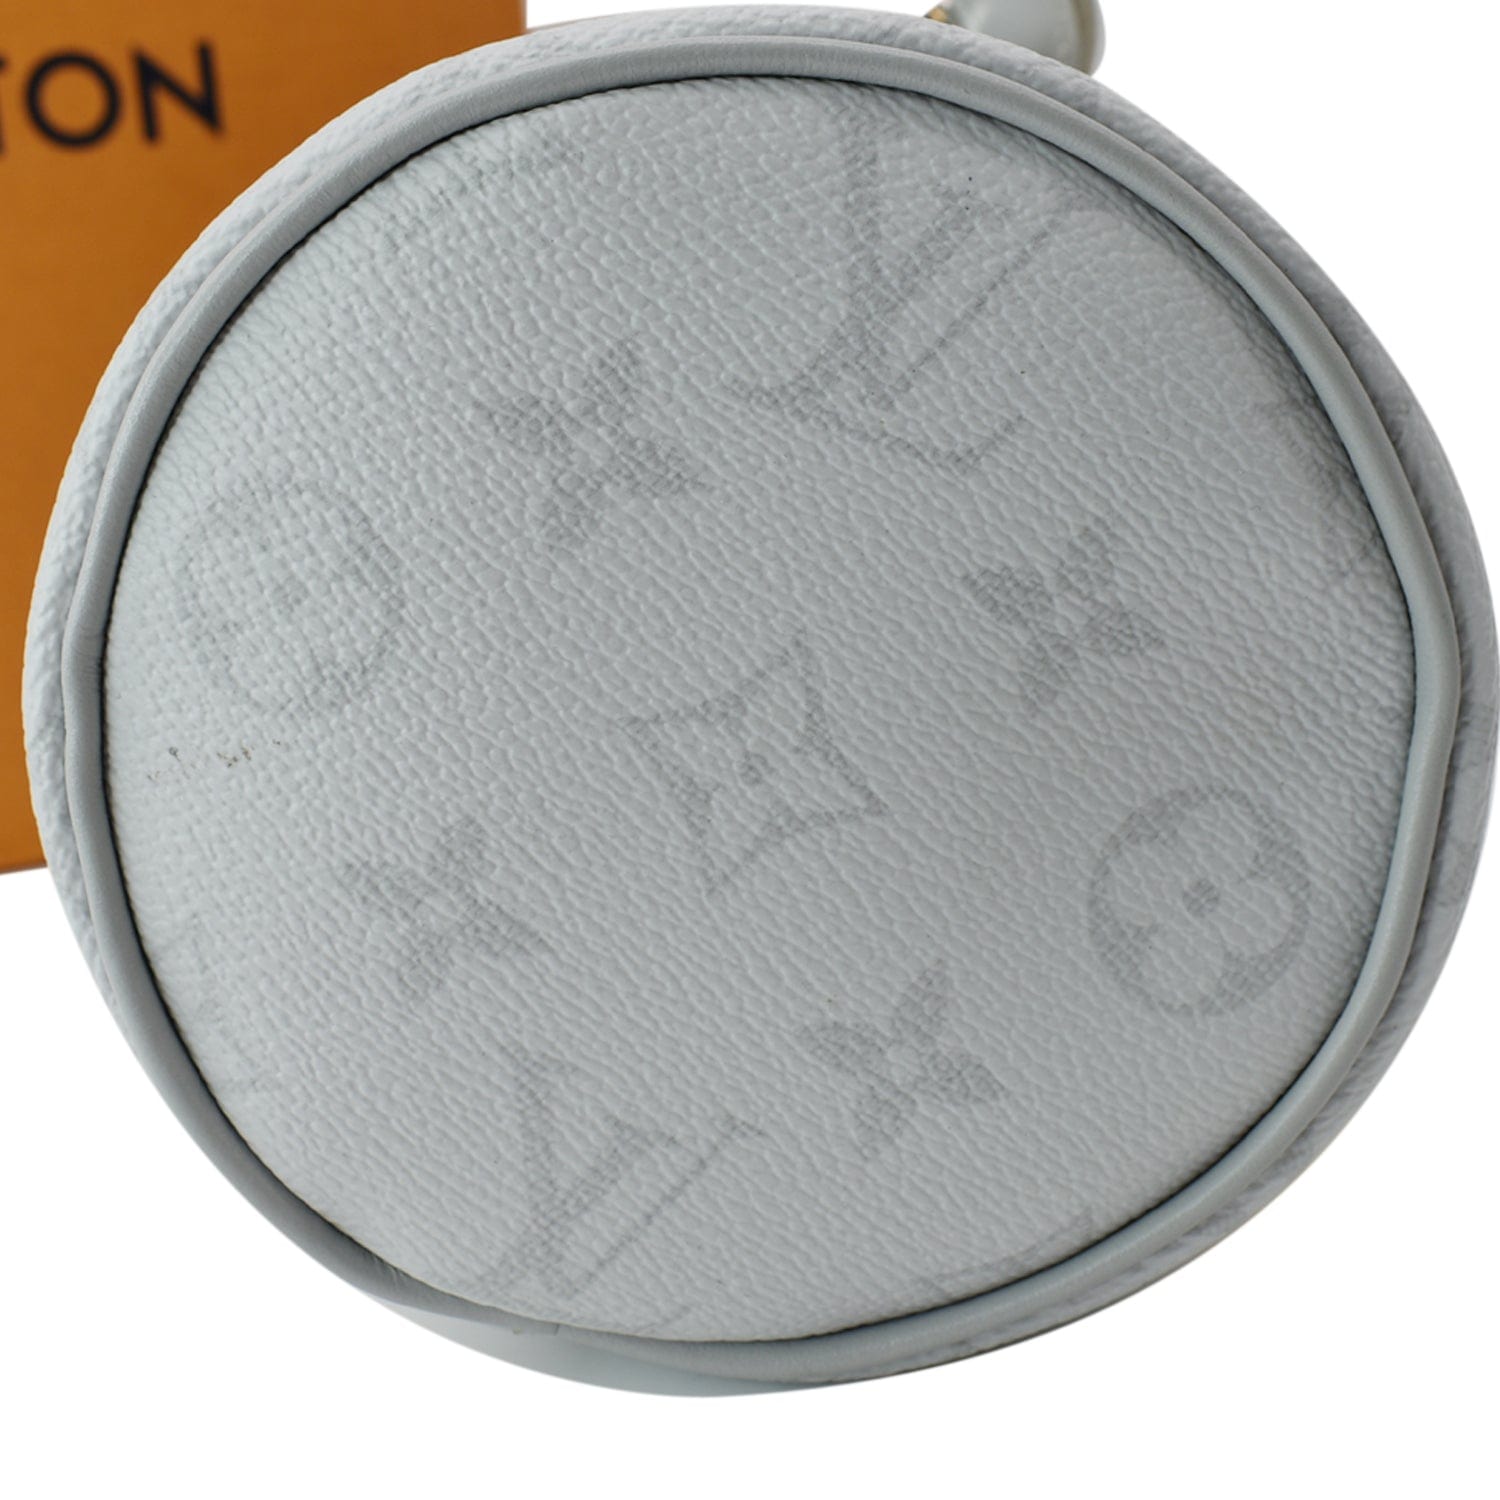 Rare, limited edition Louis Vuitton Monogram Nano Chalk bag goes